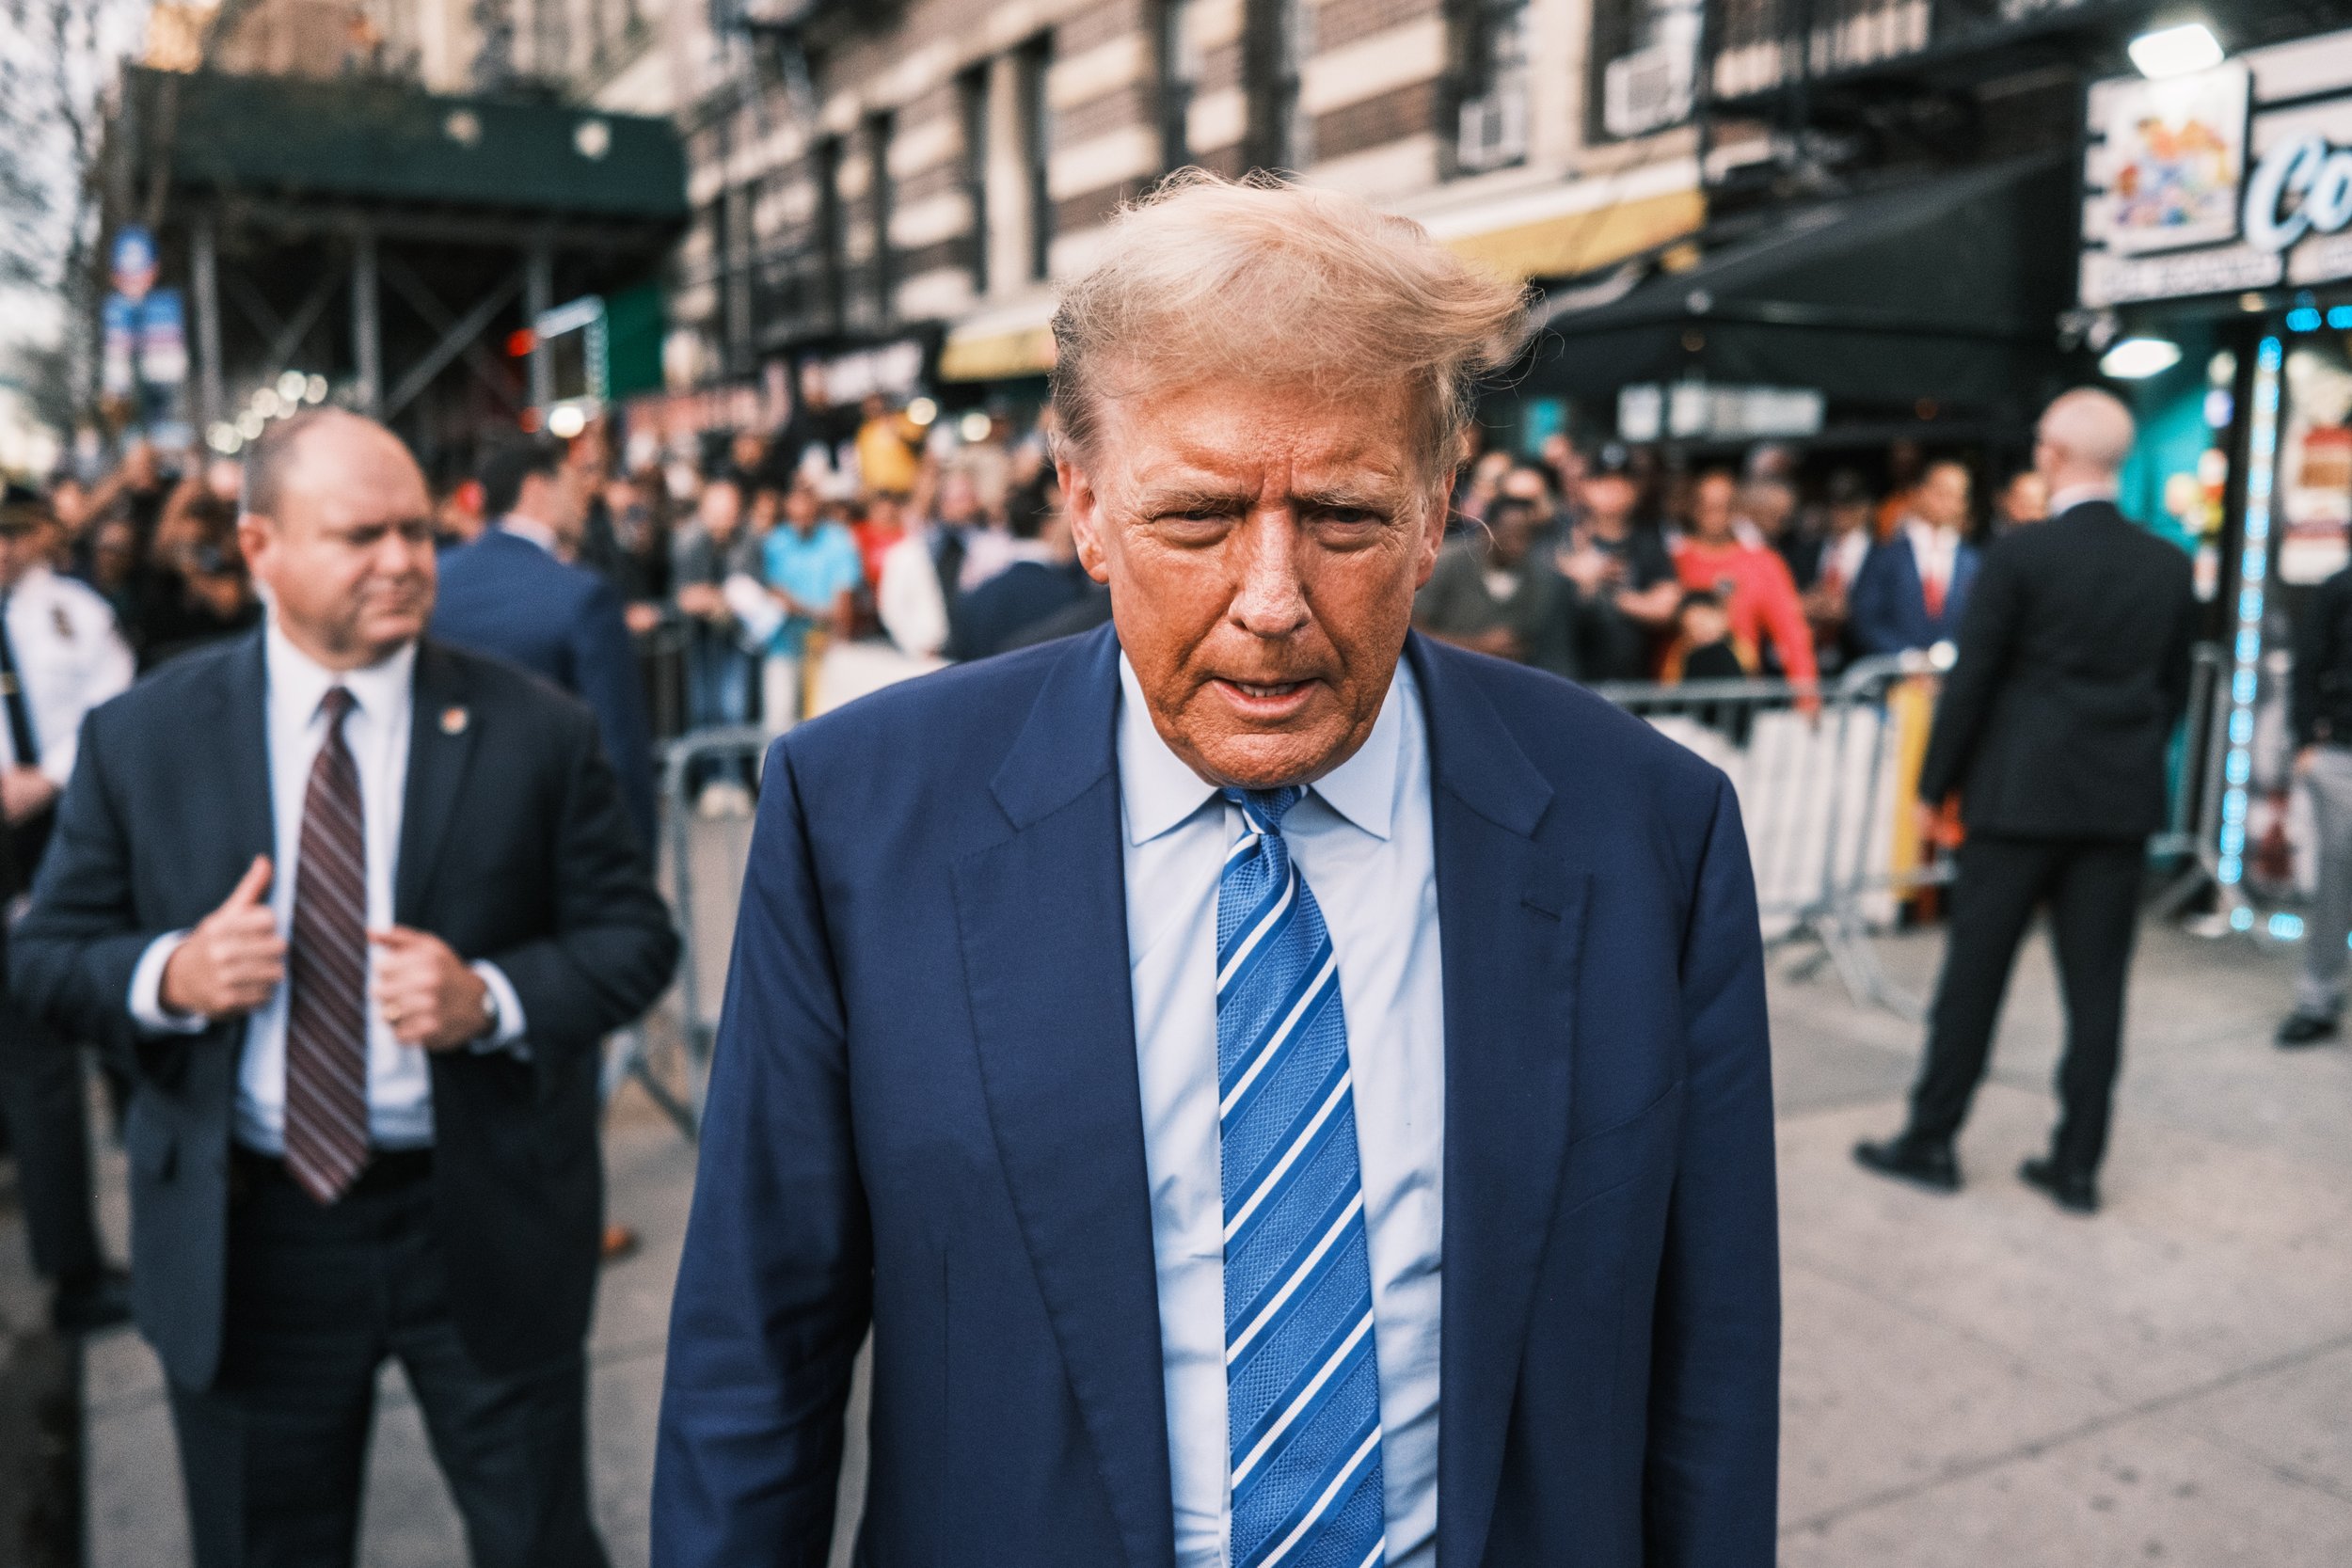 240416 Yang_NYP - Trump Deli-38.jpg